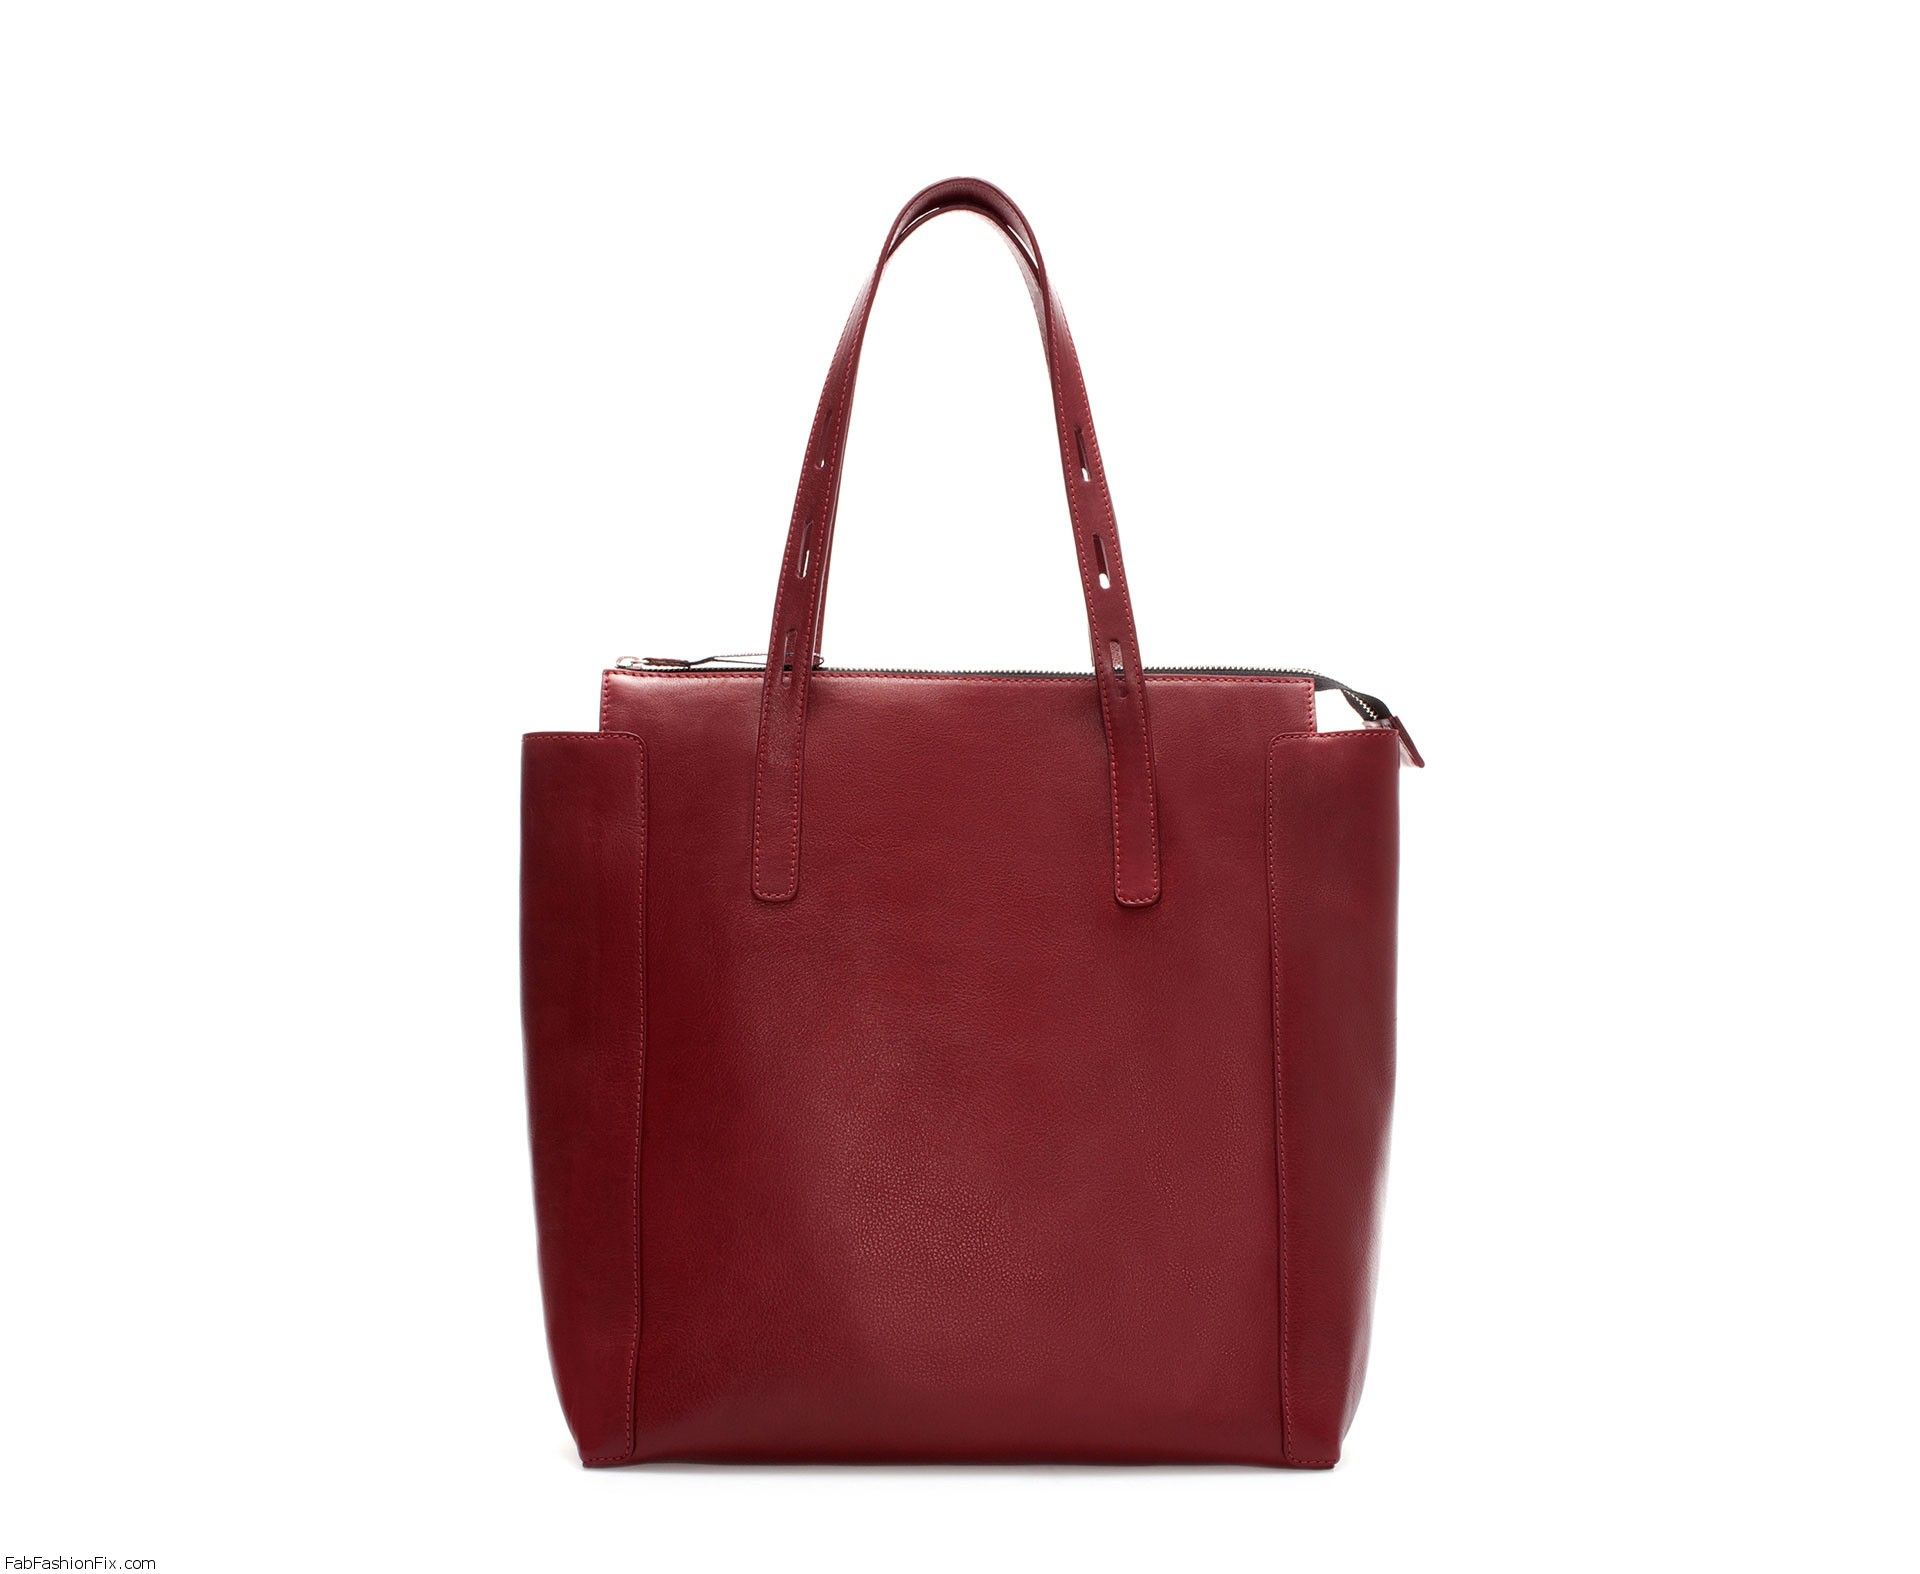 ZARA Handbags for fall/winter 2013 | Fab Fashion Fix